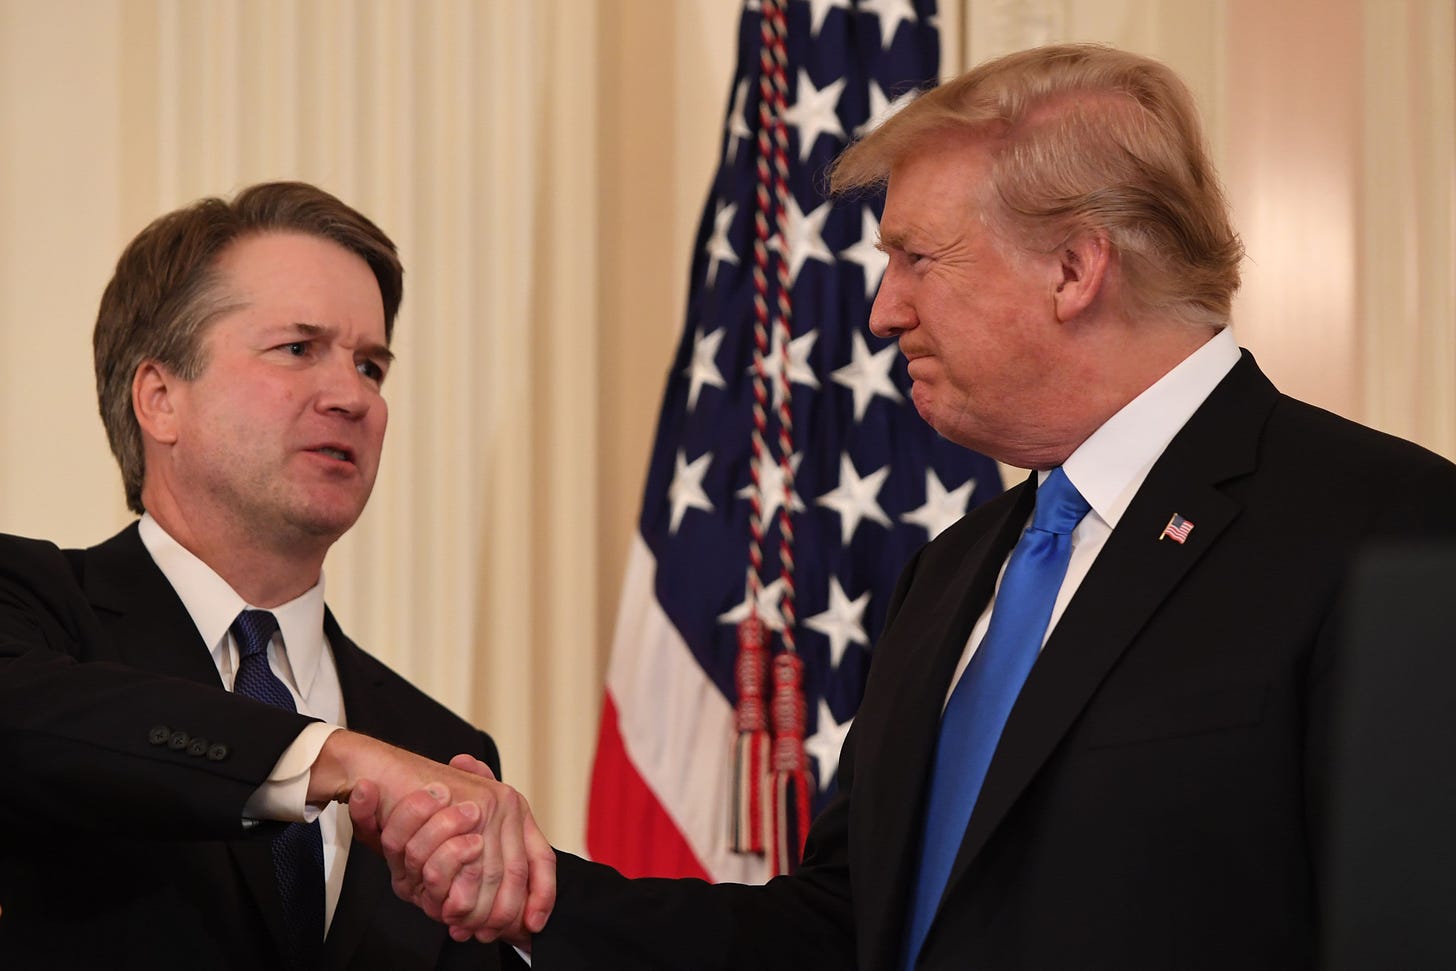 Trump picks Brett Kavanaugh for the Supreme Court